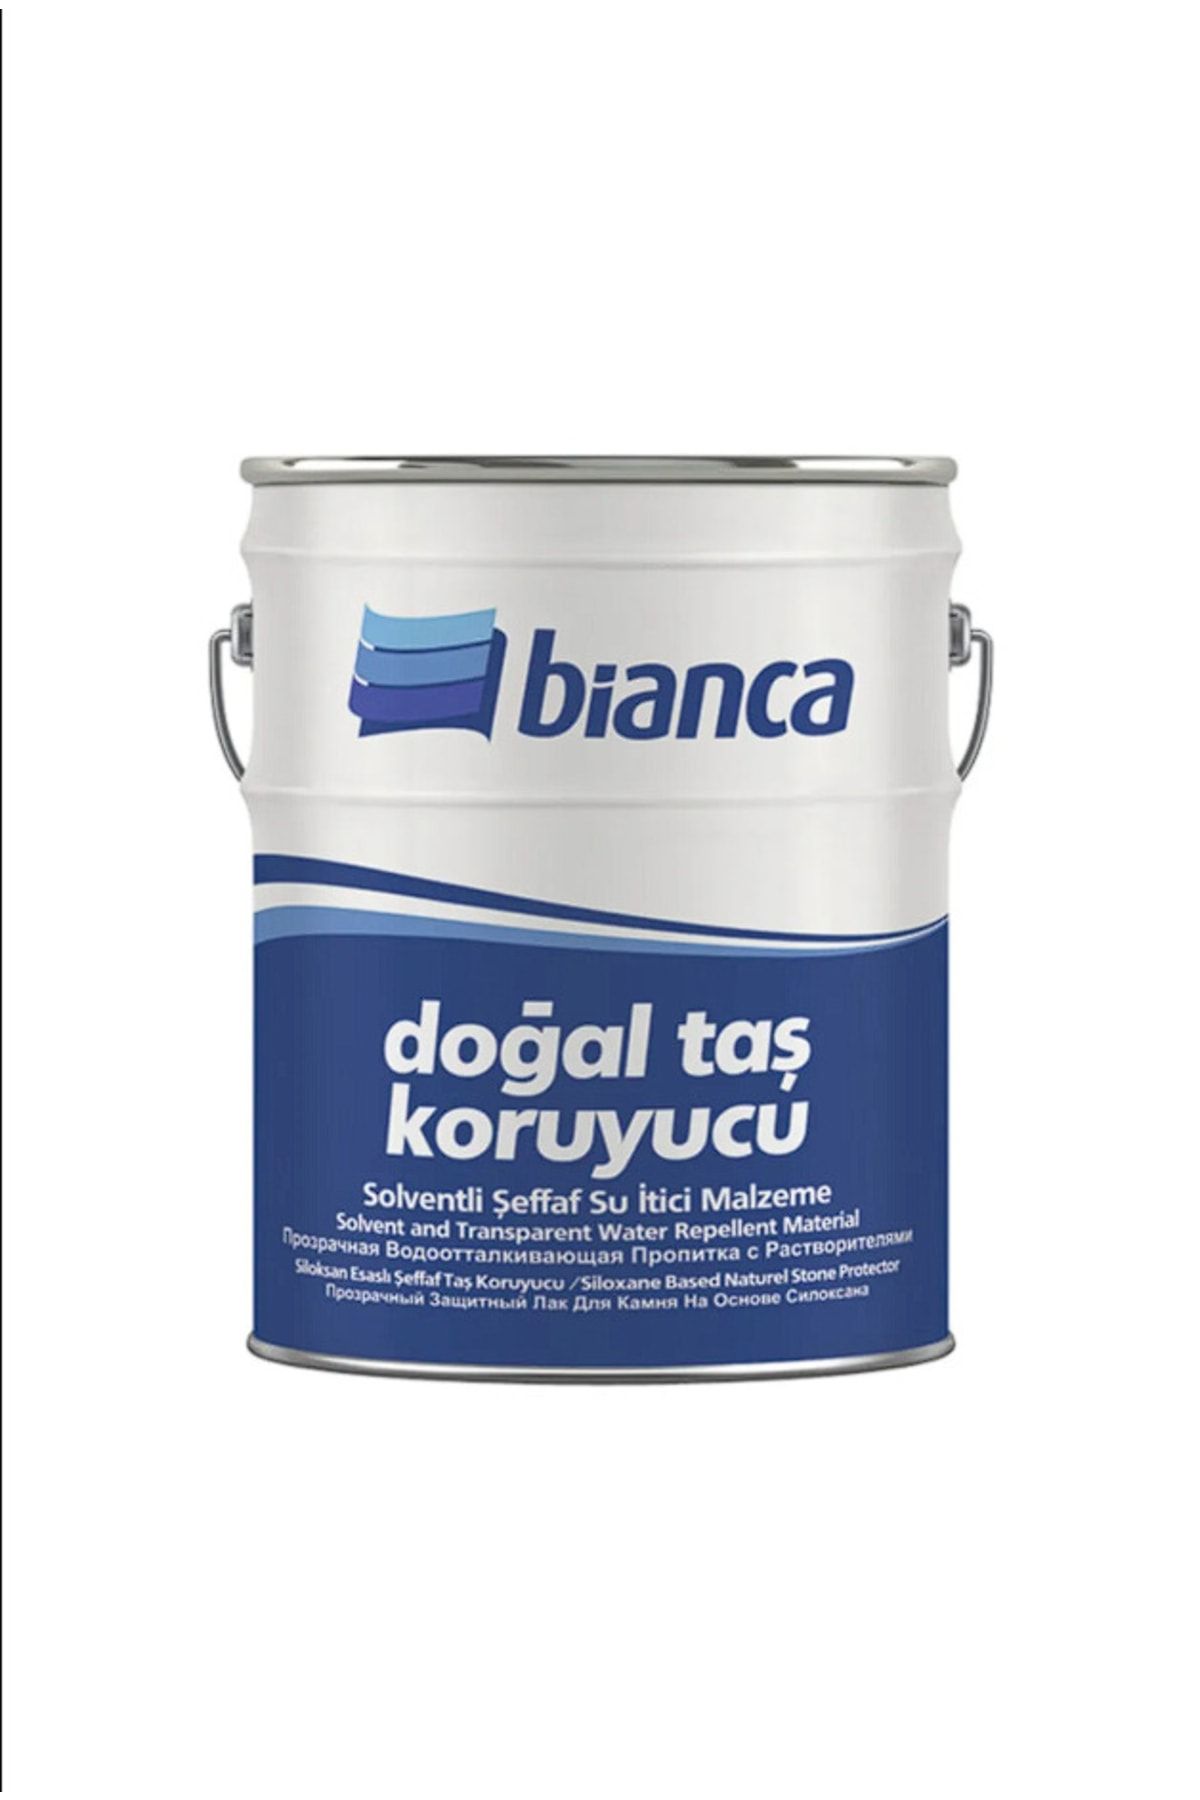 Bianca Doğal Taş Koruyucu (solventli Şeffaf Su Itici Malzeme)